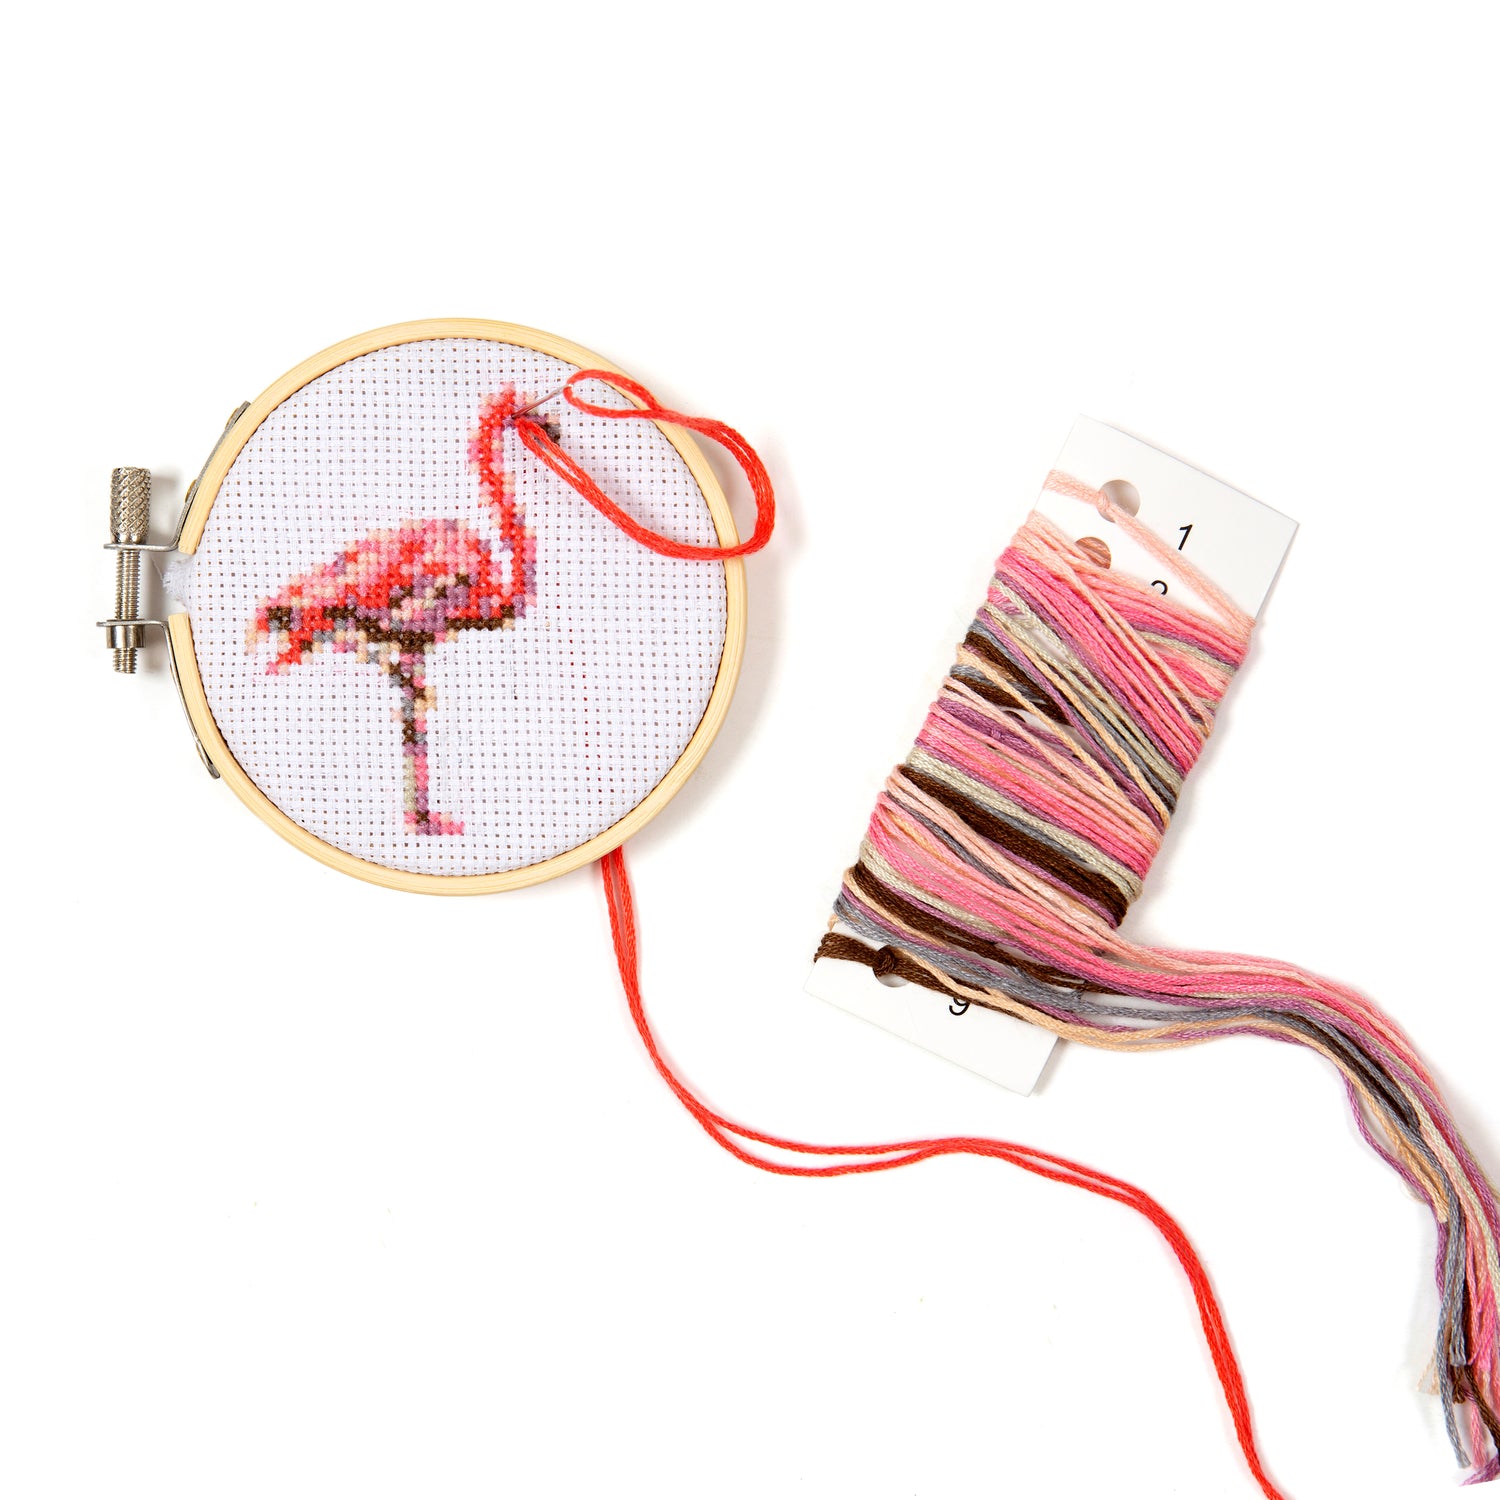 Flamingo Mini Cross Stitch Embroidery Kit